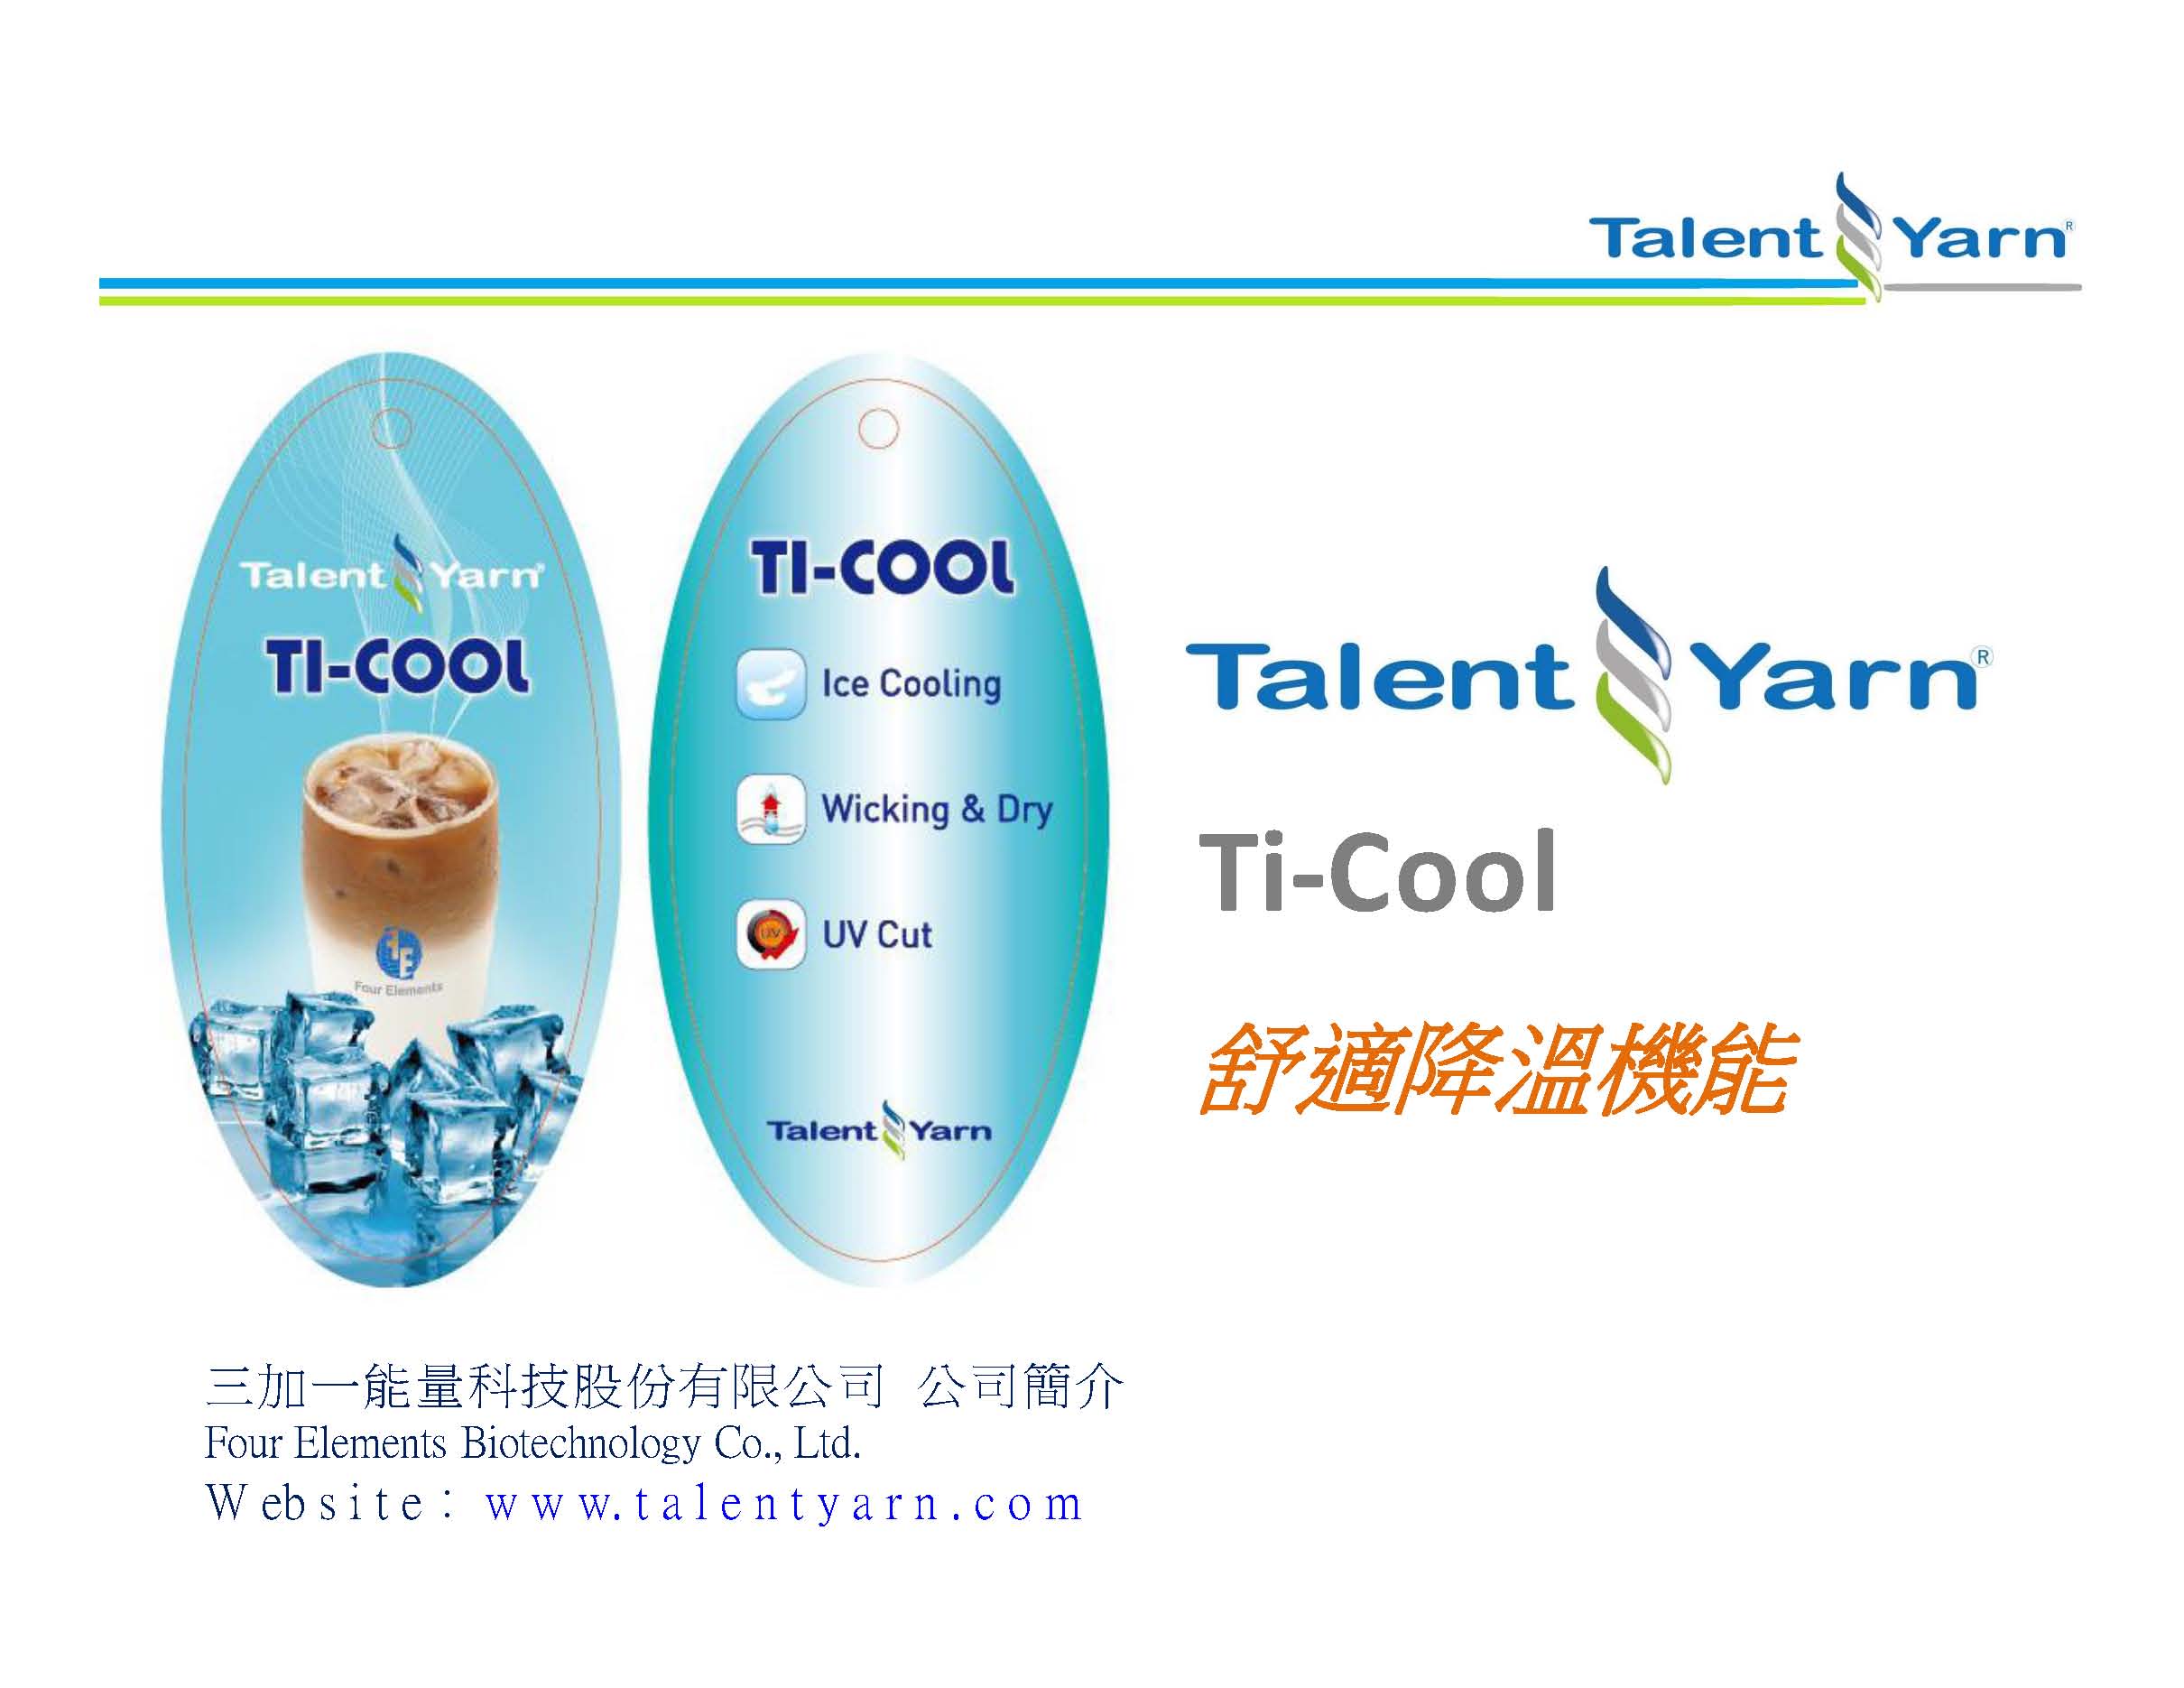 Talent Yarn Ti-Cool(中)